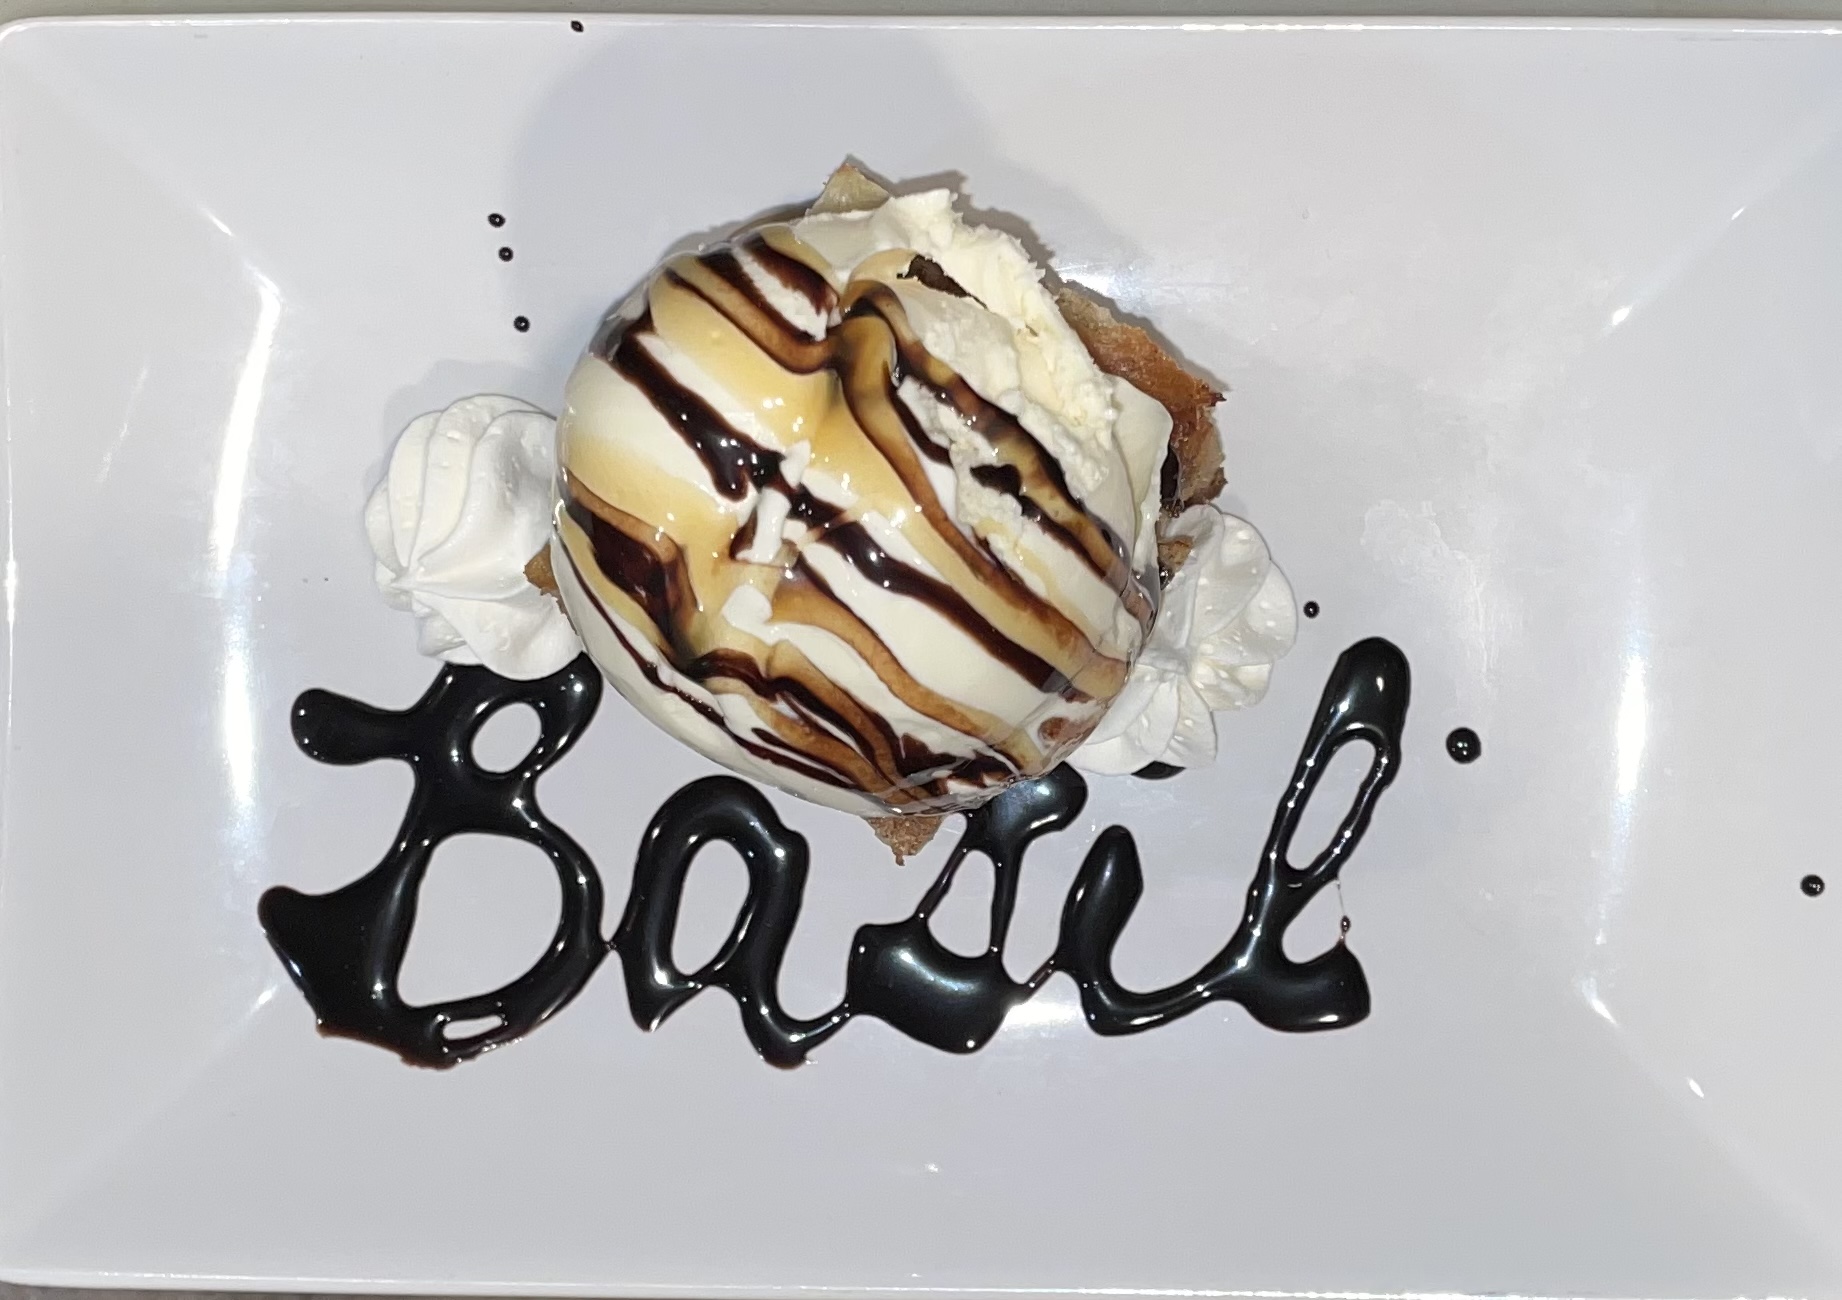 Basil Cafe Restaurant